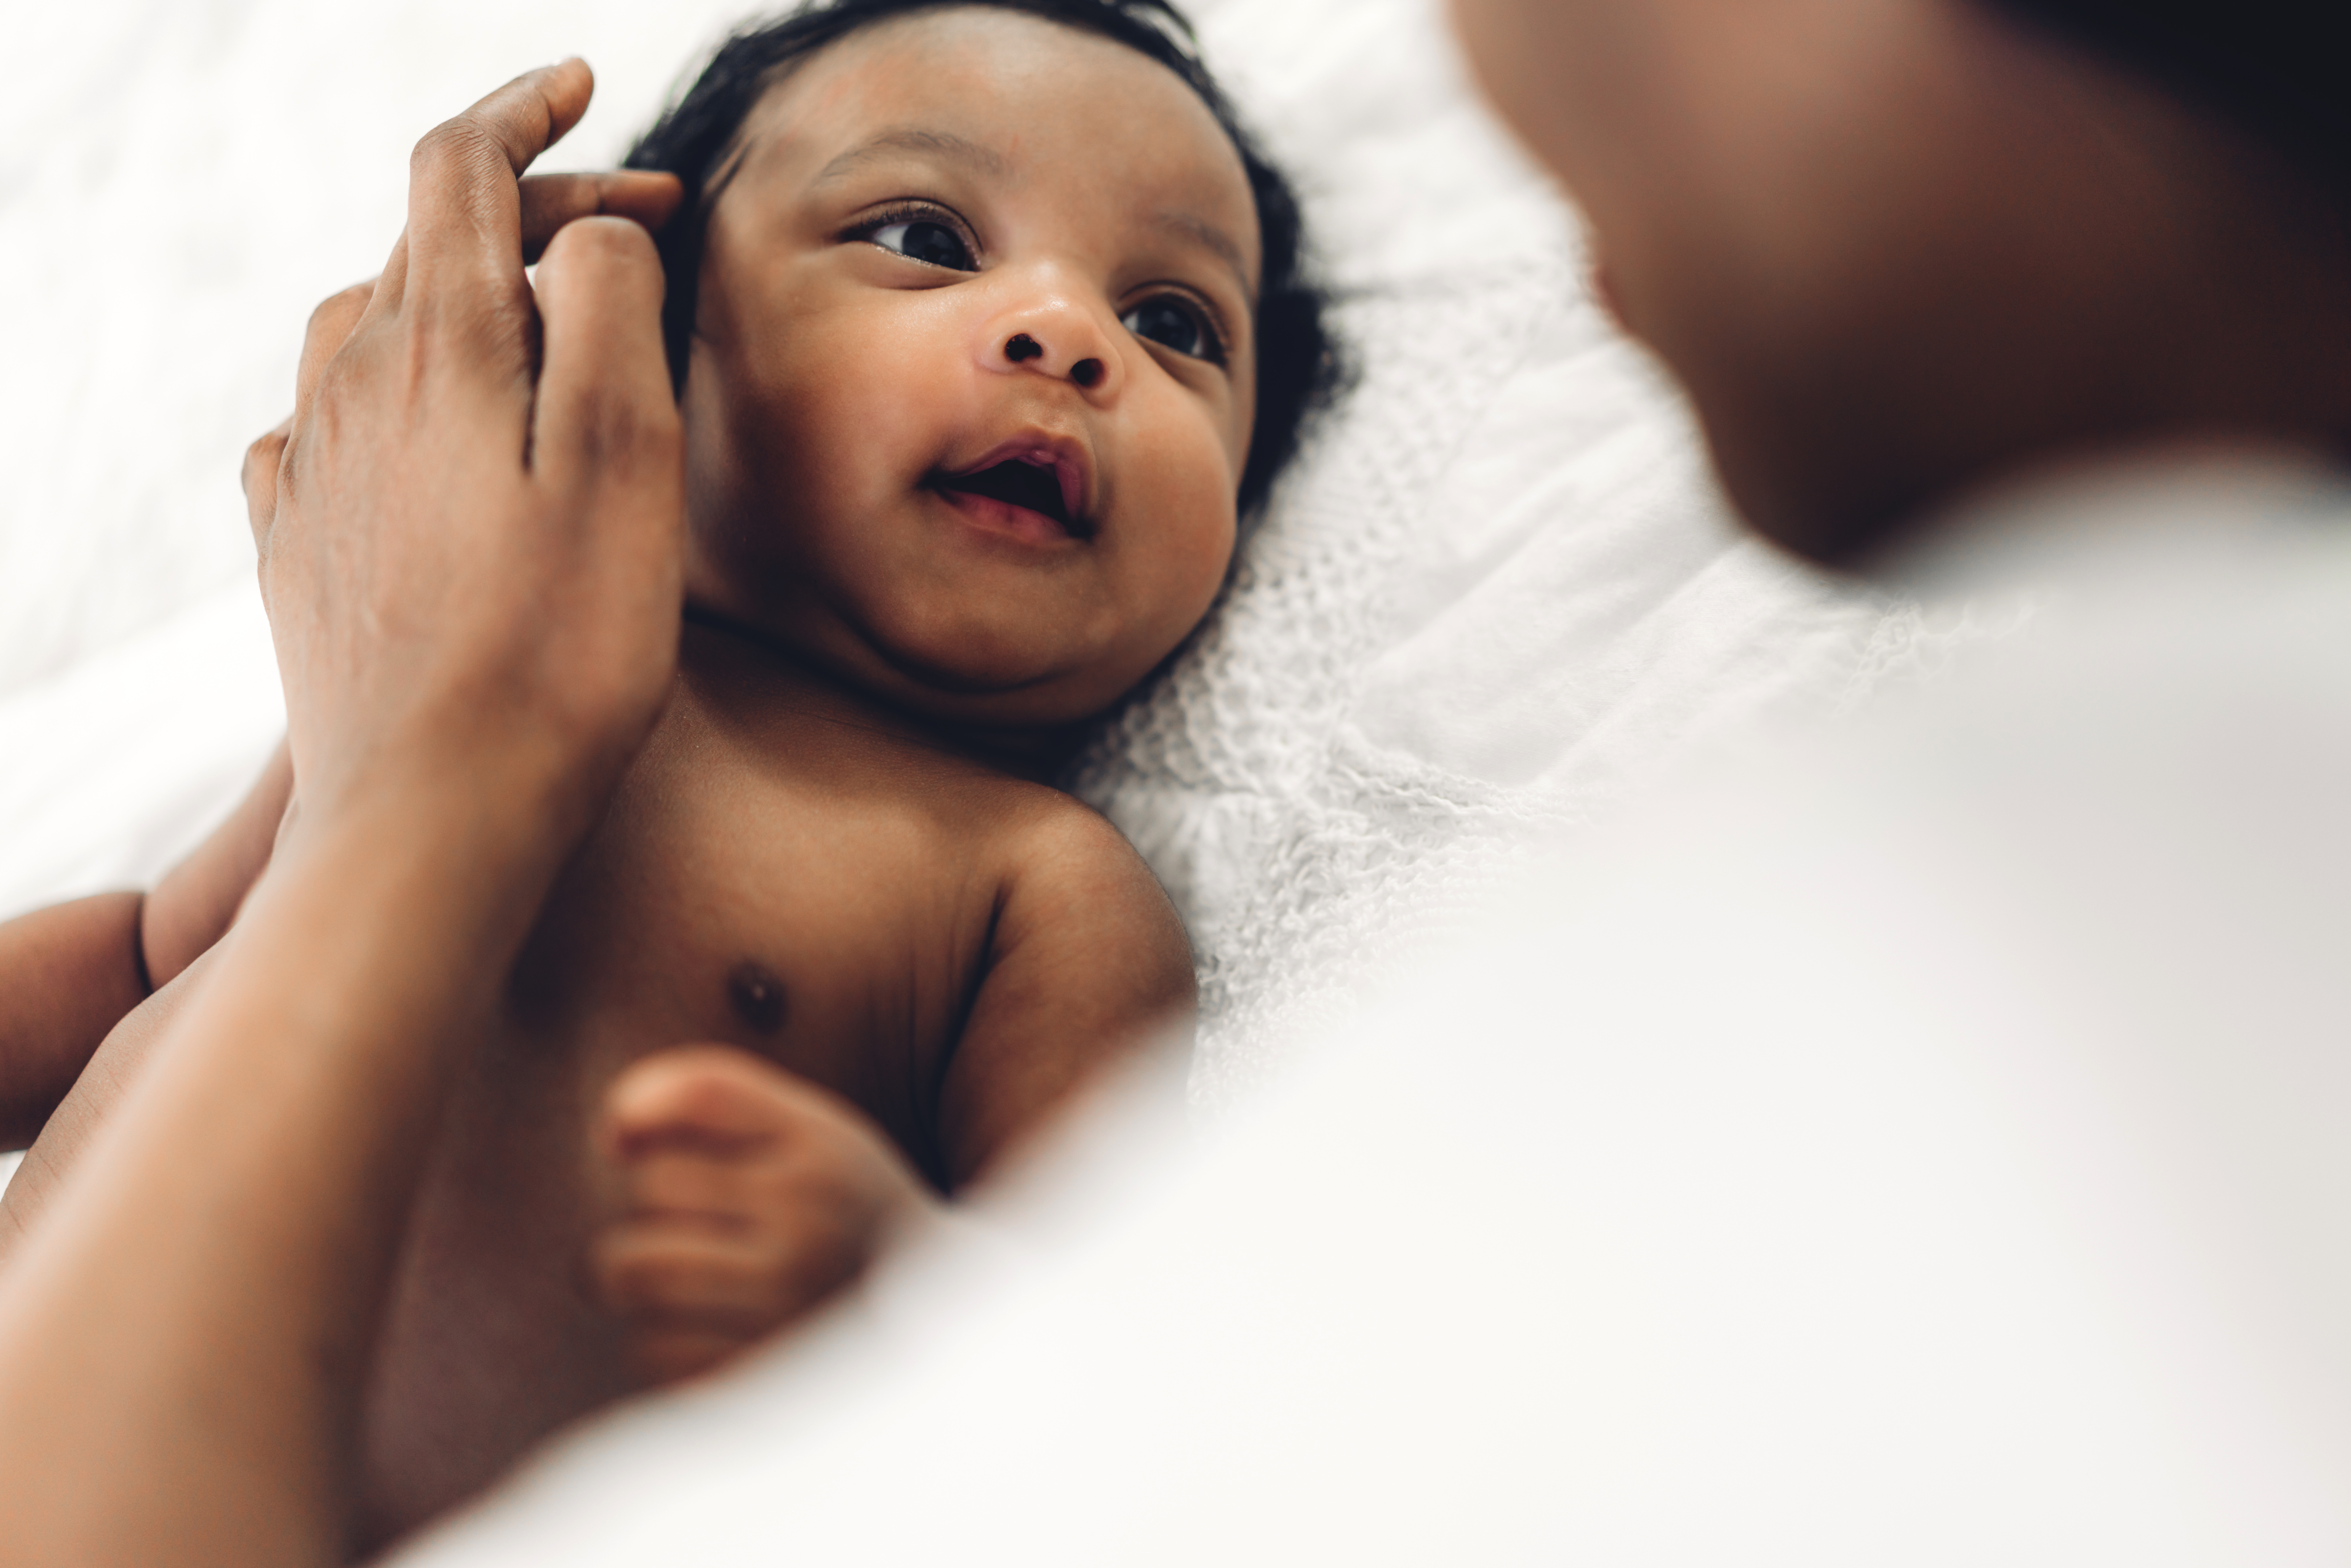 A woman caressing a newborn baby's face | Source: Shutterstock